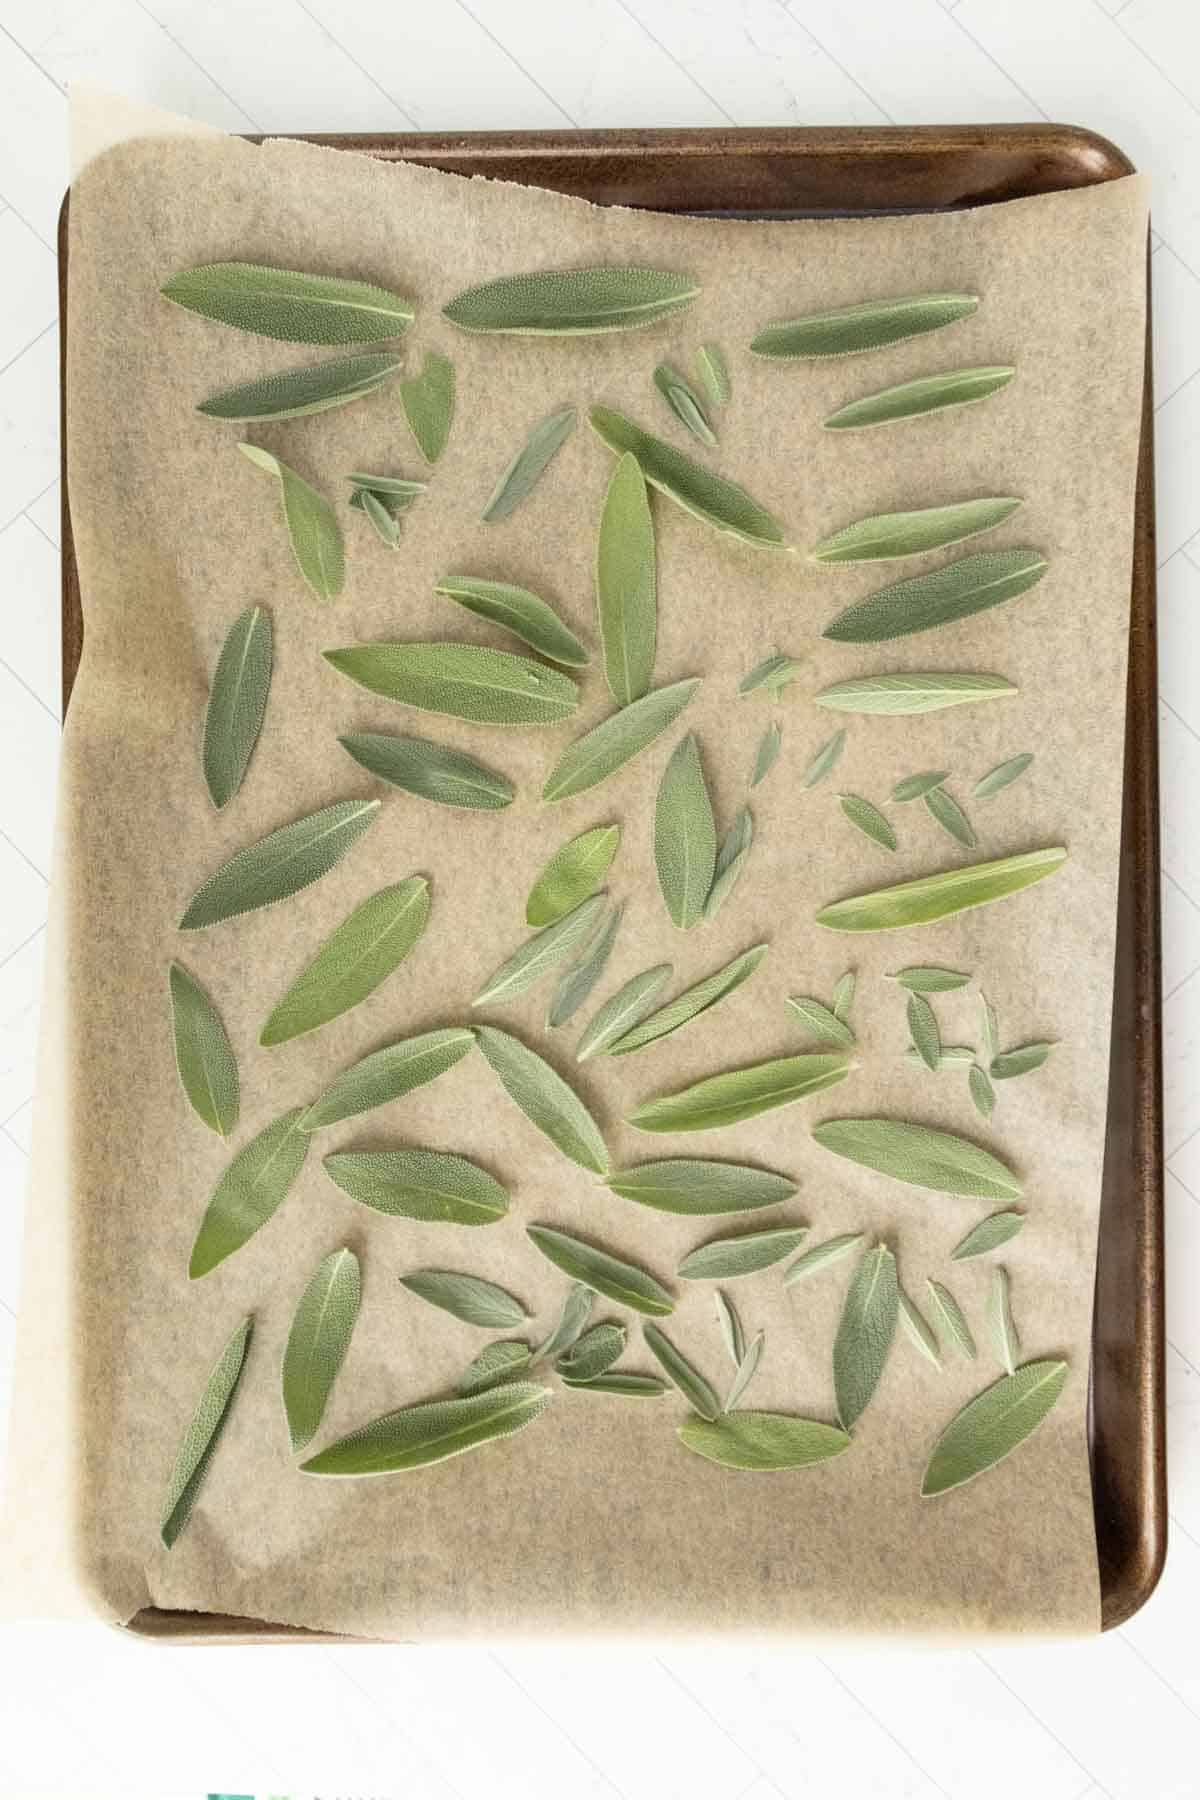 Sage leaves on a baking sheet.